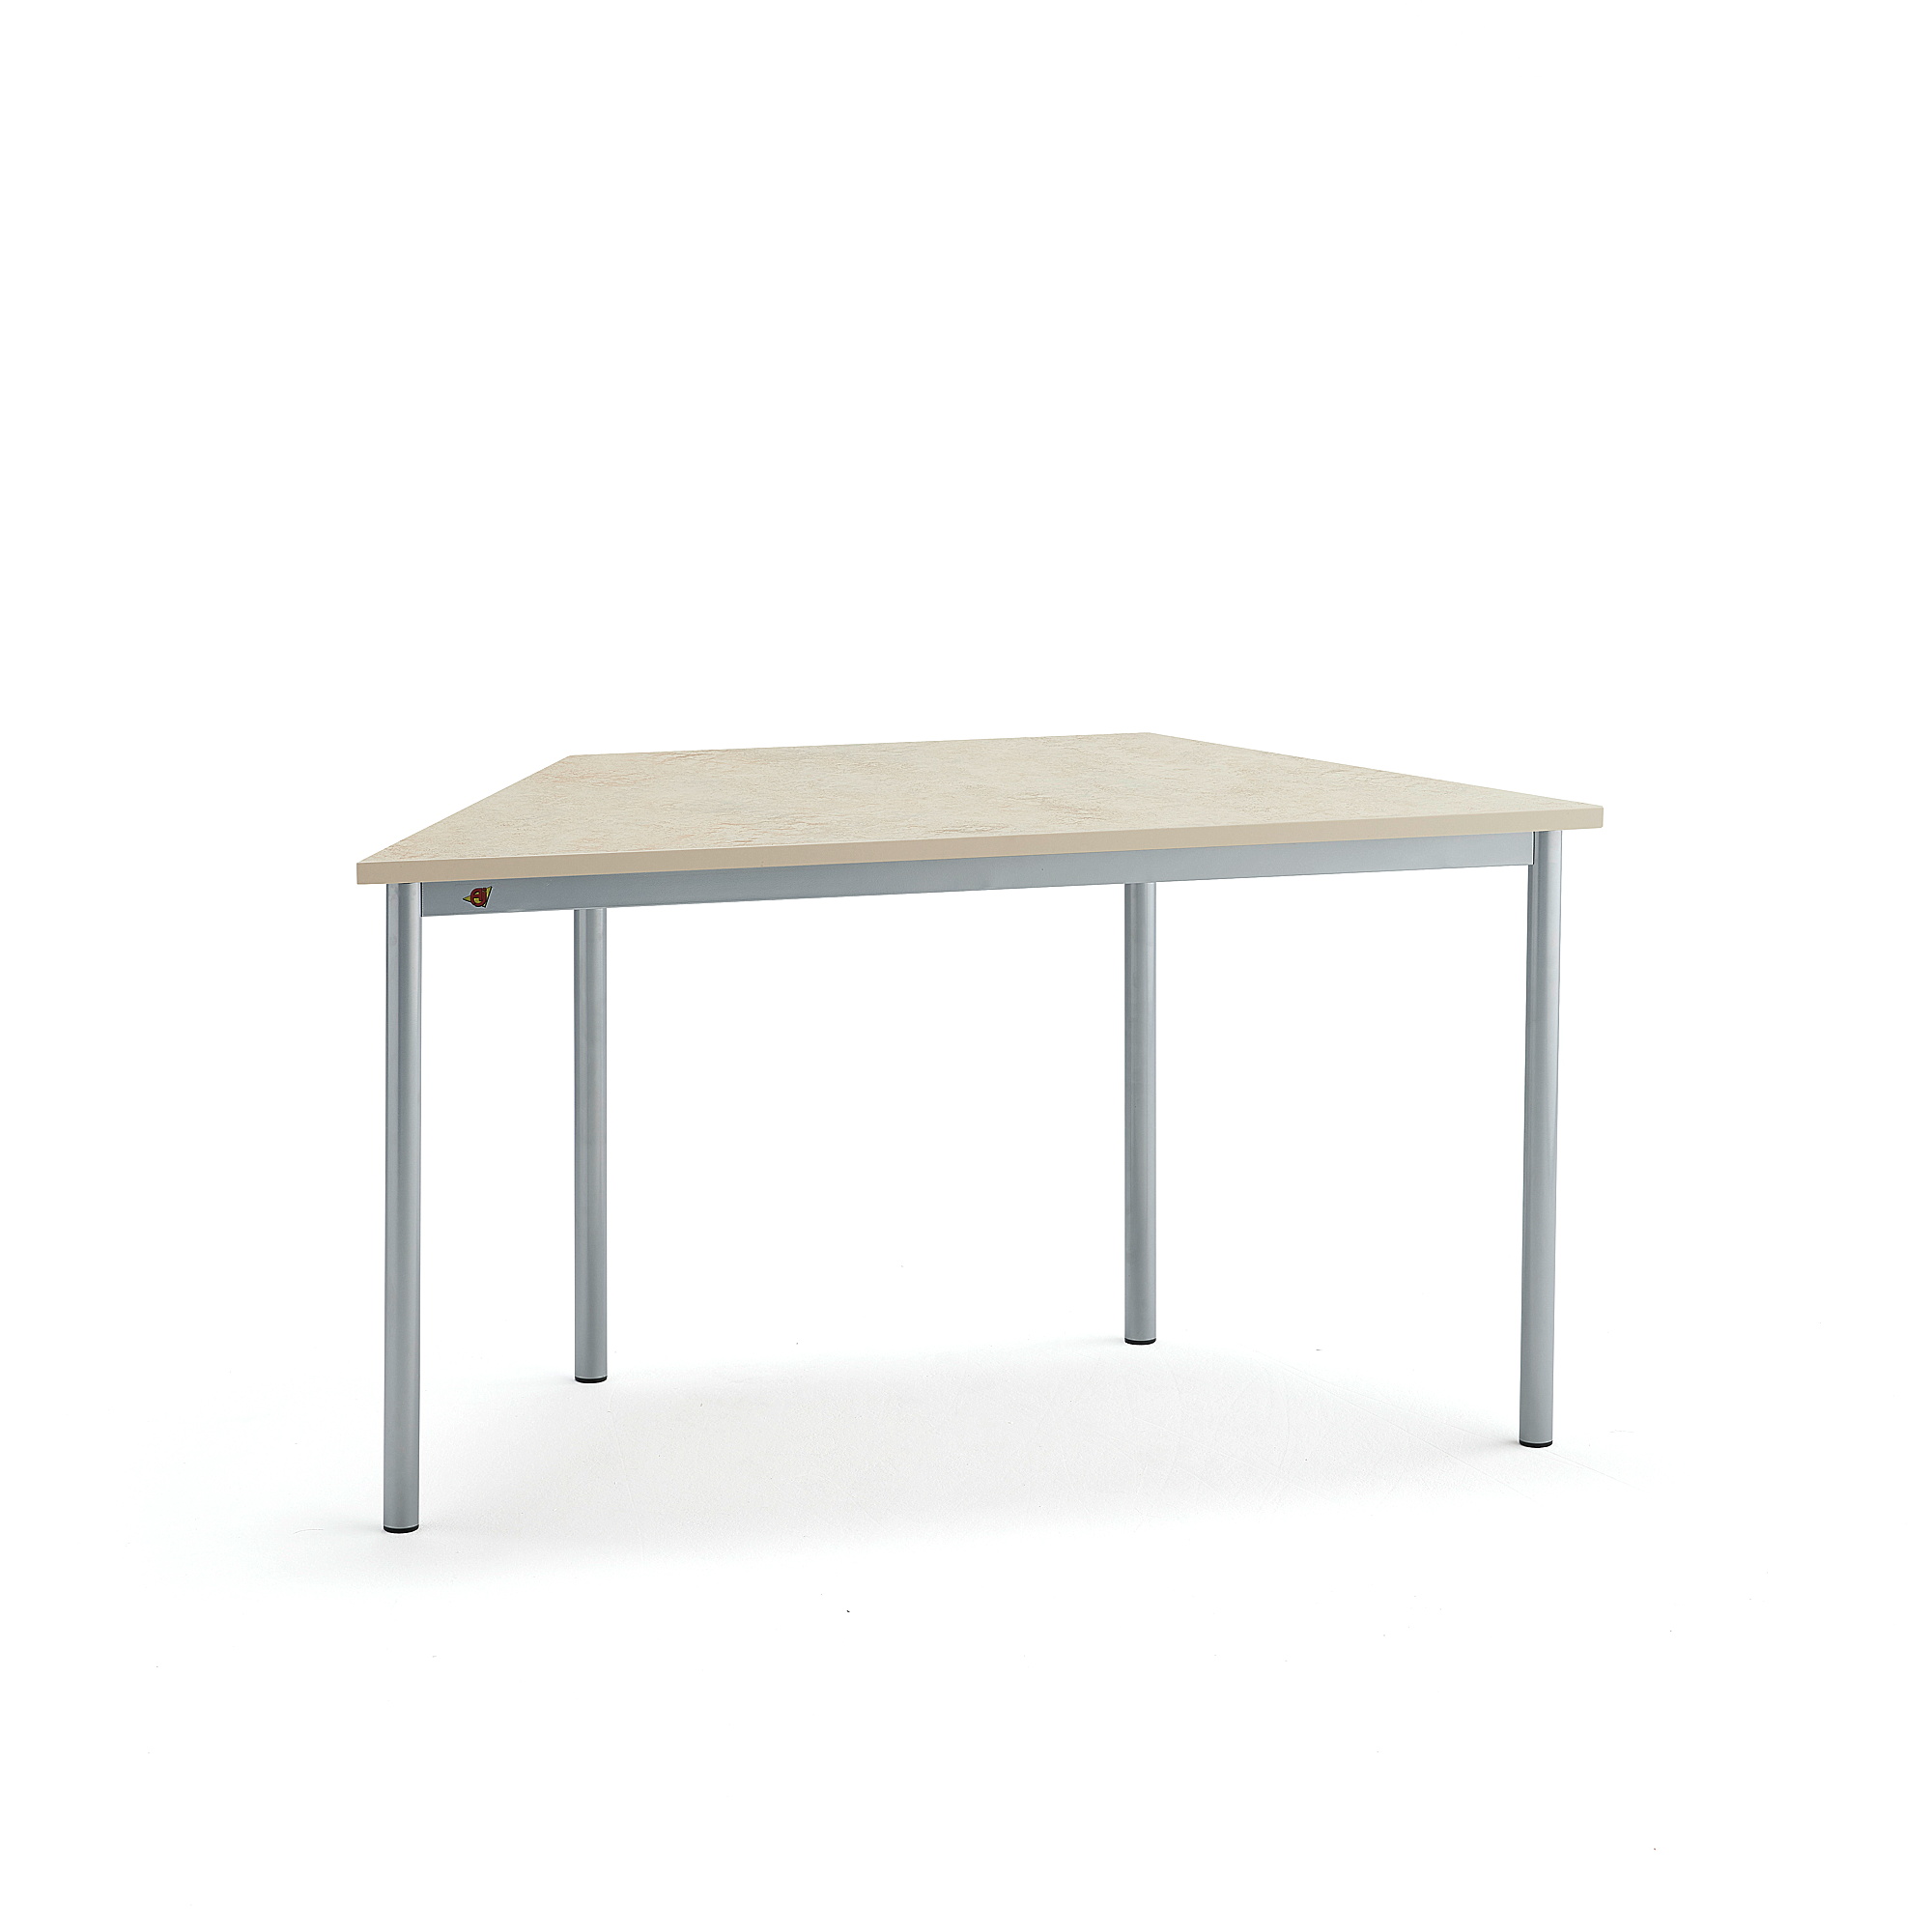 Stůl SONITUS TRAPETS, 1400x700x720 mm, stříbrné nohy, deska s linoleem, béžová